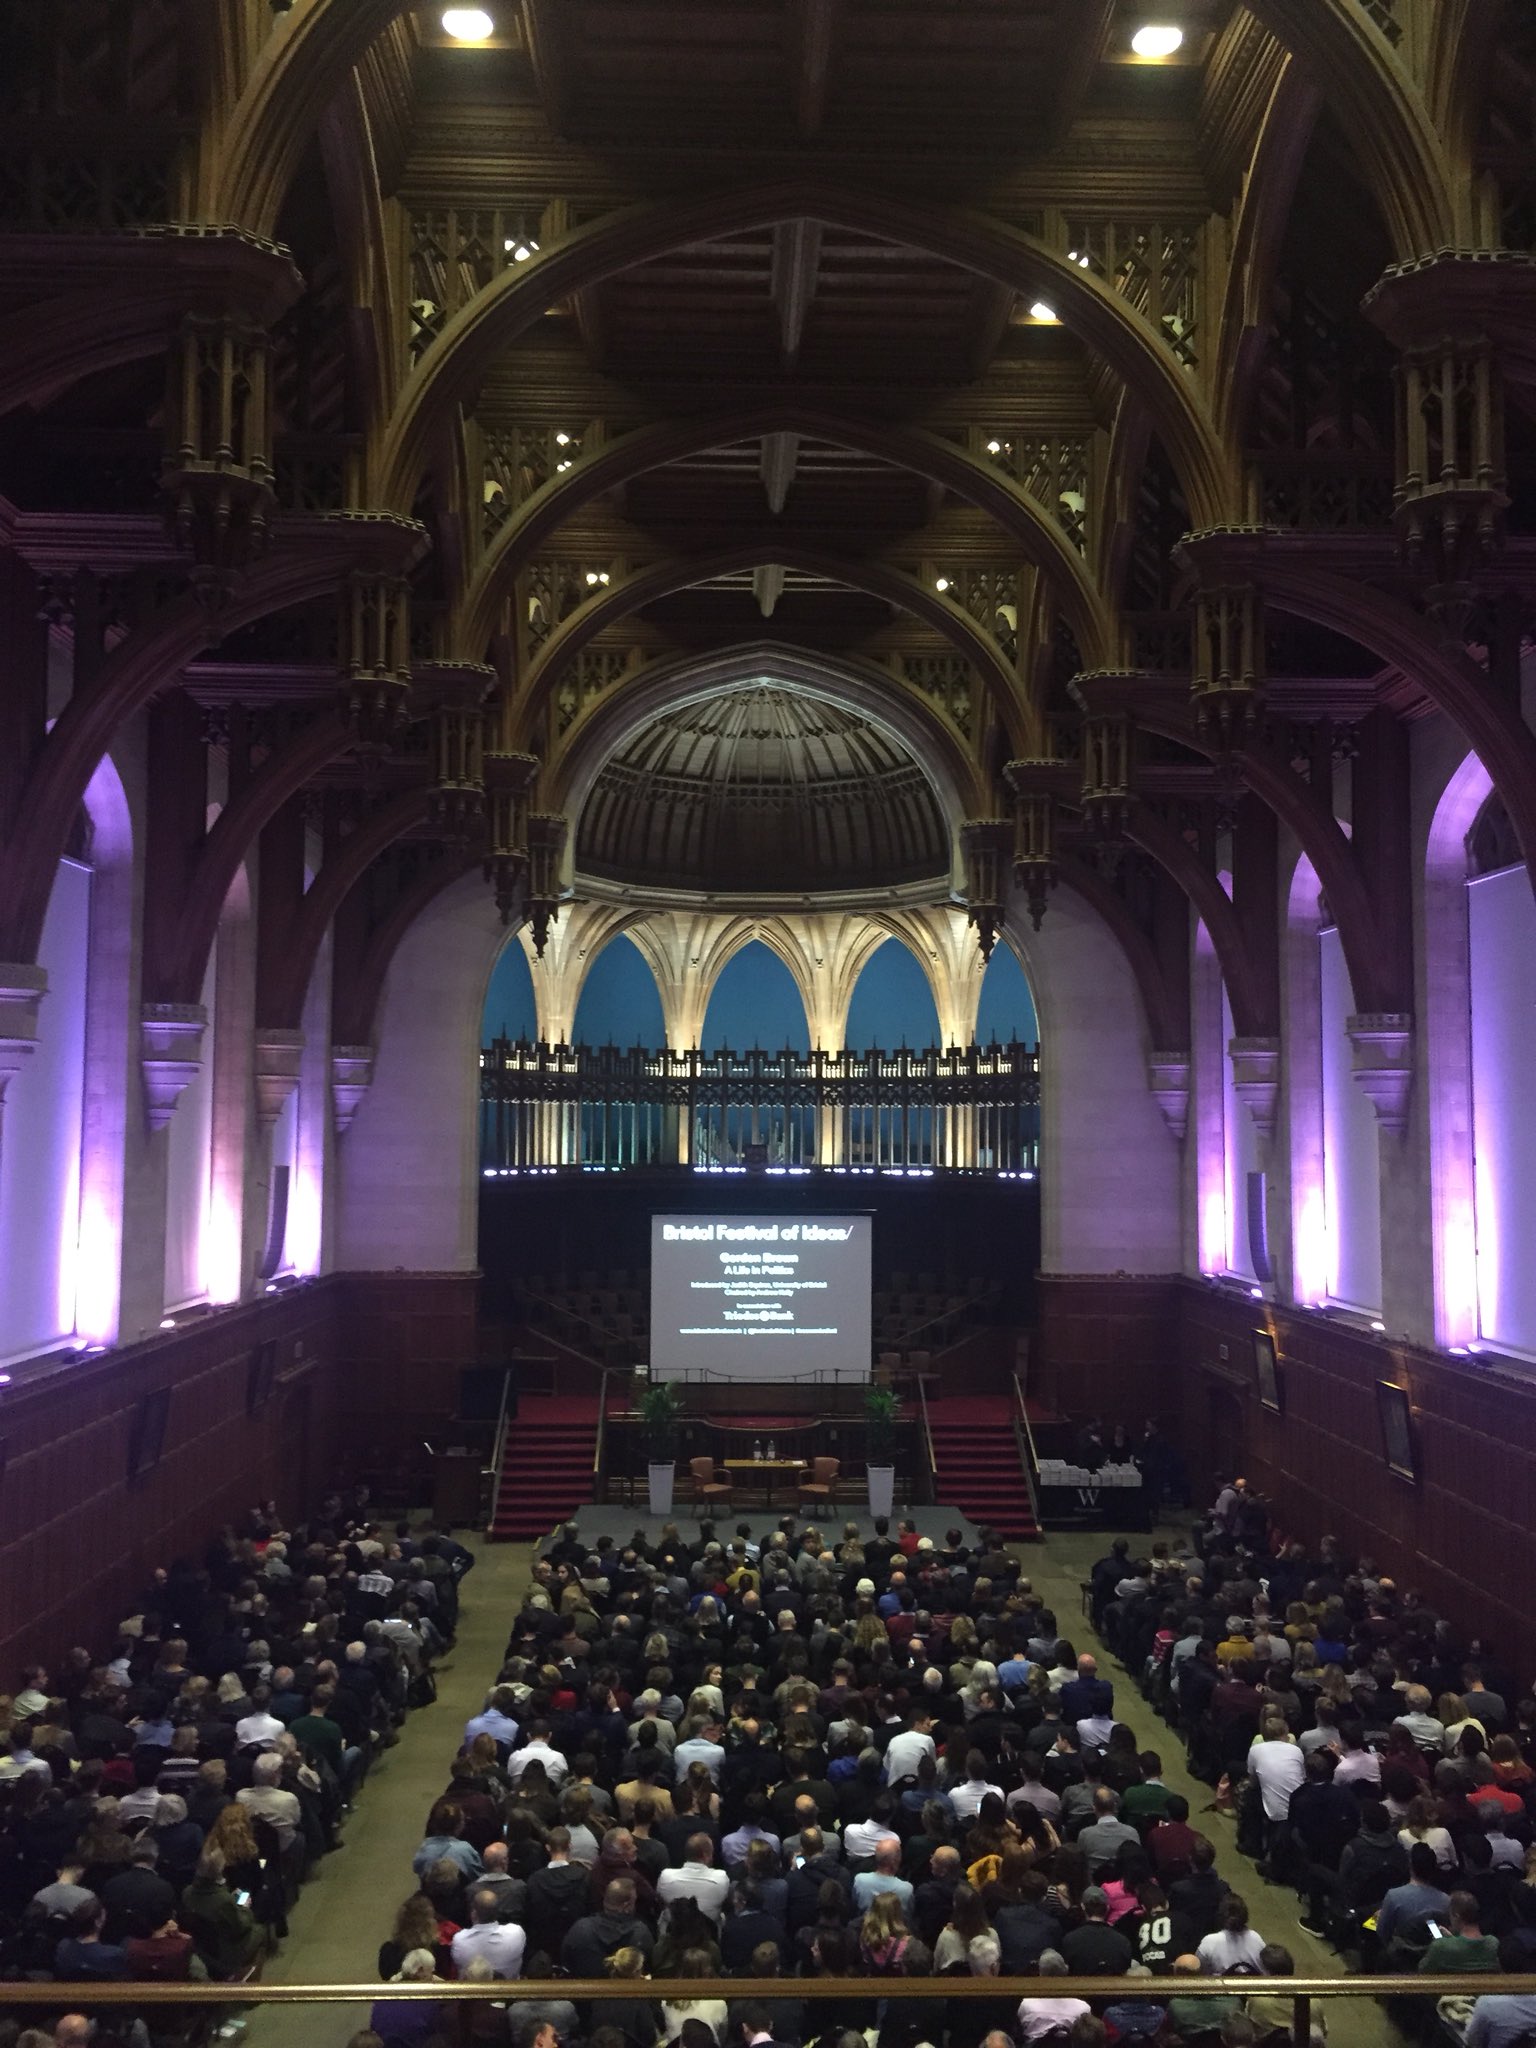 “A life in Politics” intrigued to hear Gordon Brown’s version @FestivalofIdeas #economicsfest https://t.co/1GKk0mSNWL